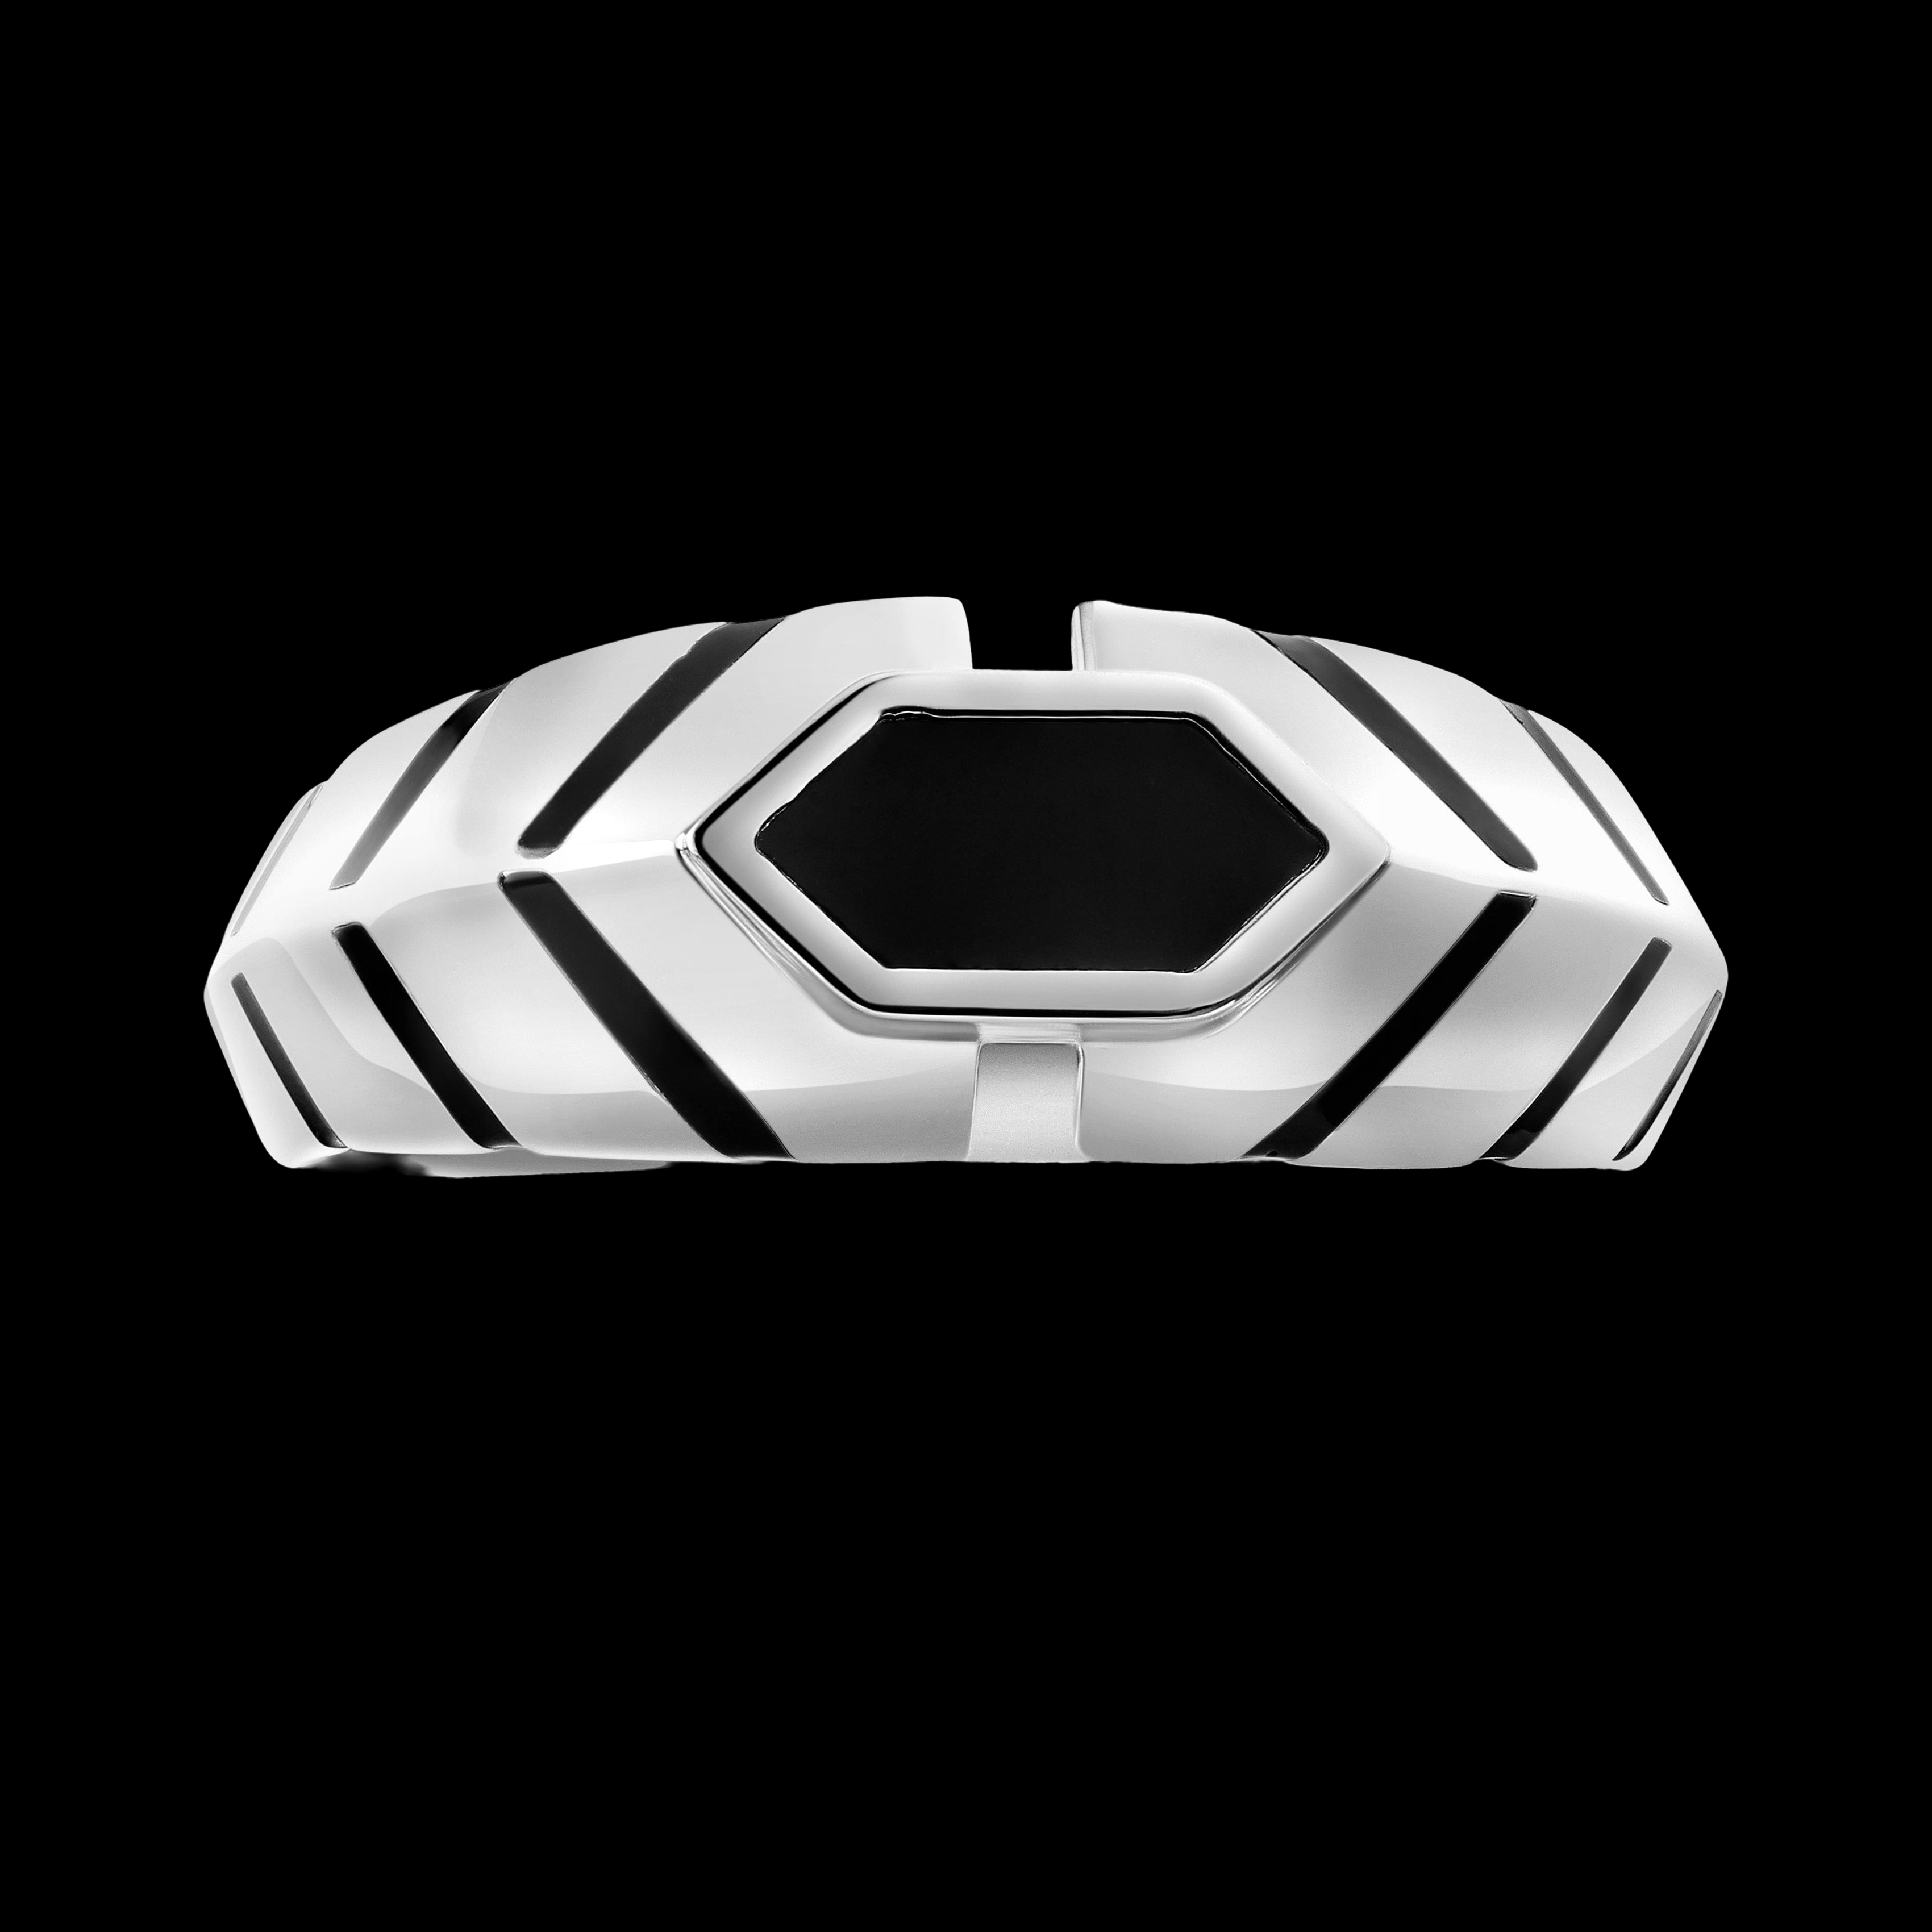 Platinum Ring with Black Enamel for Men JL PT 1310   Jewelove.US